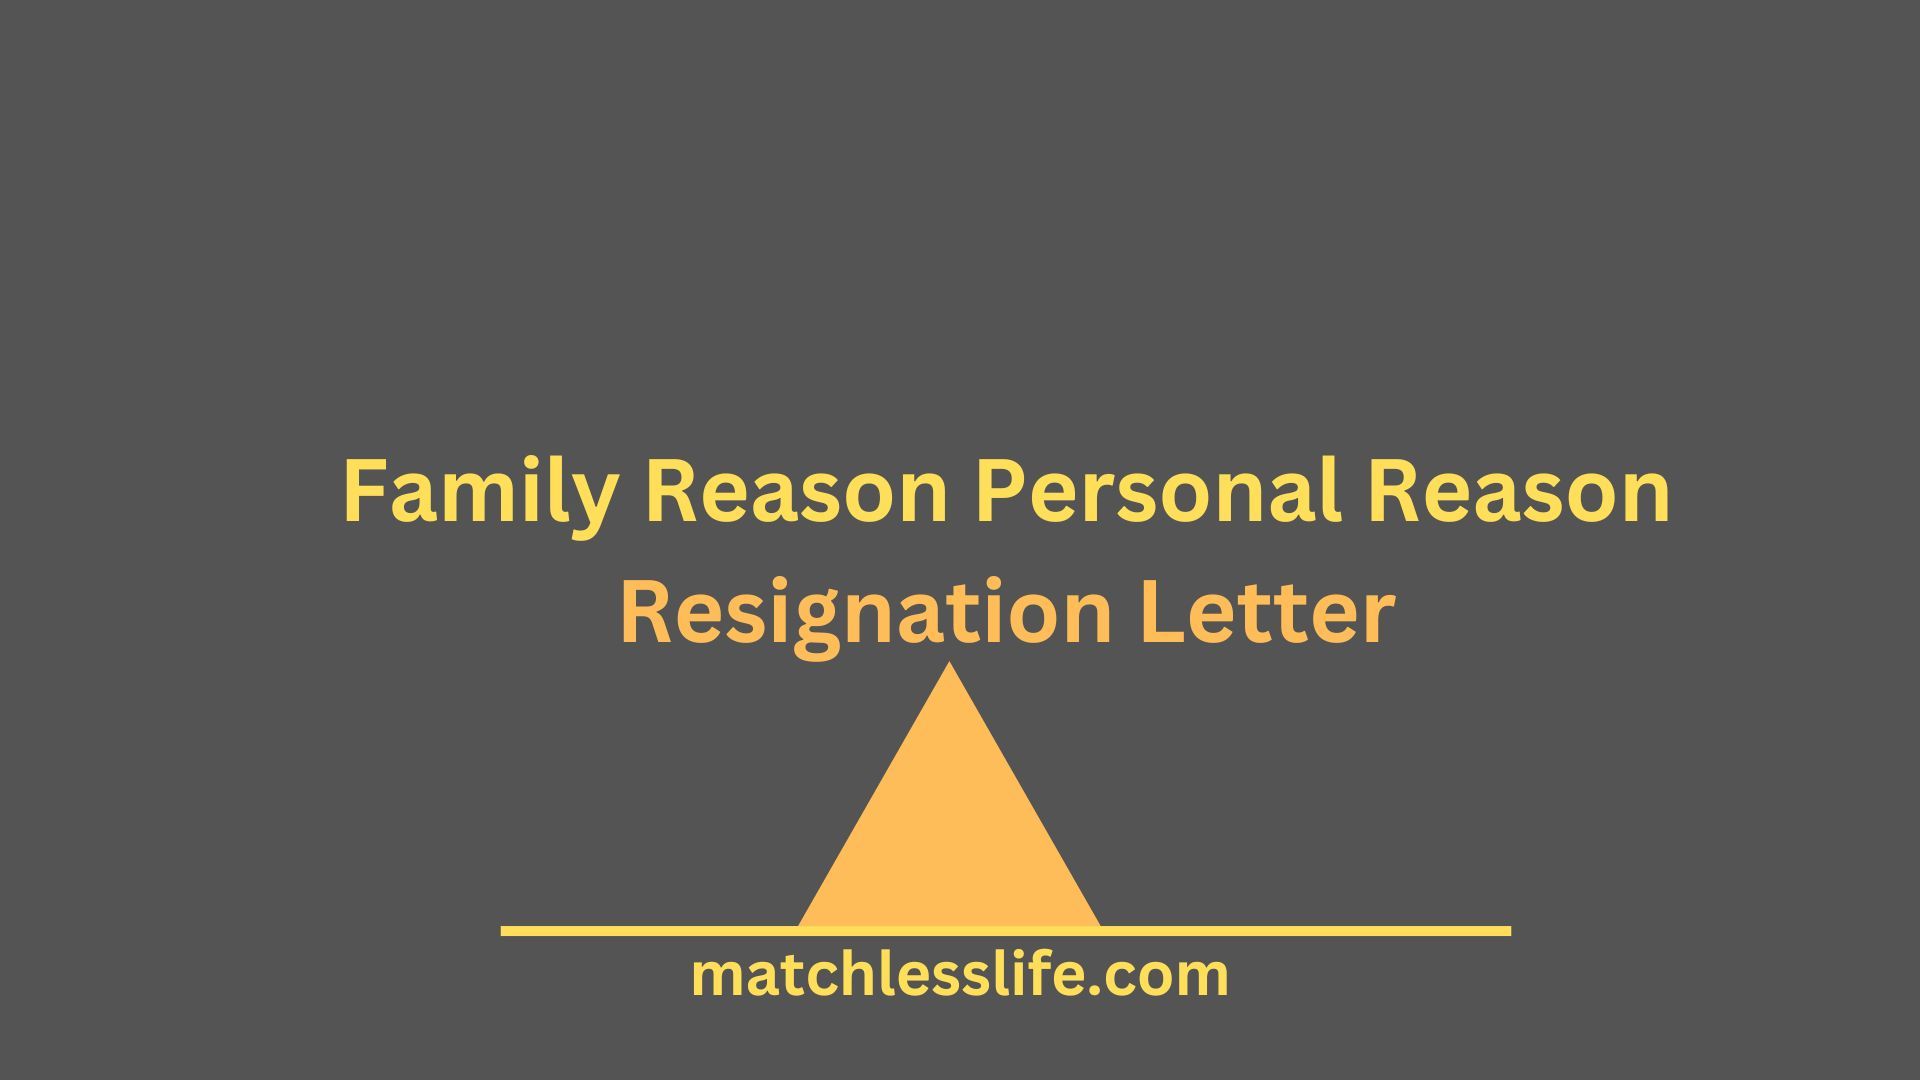 Family Reason Personal Reason Resignation Letter